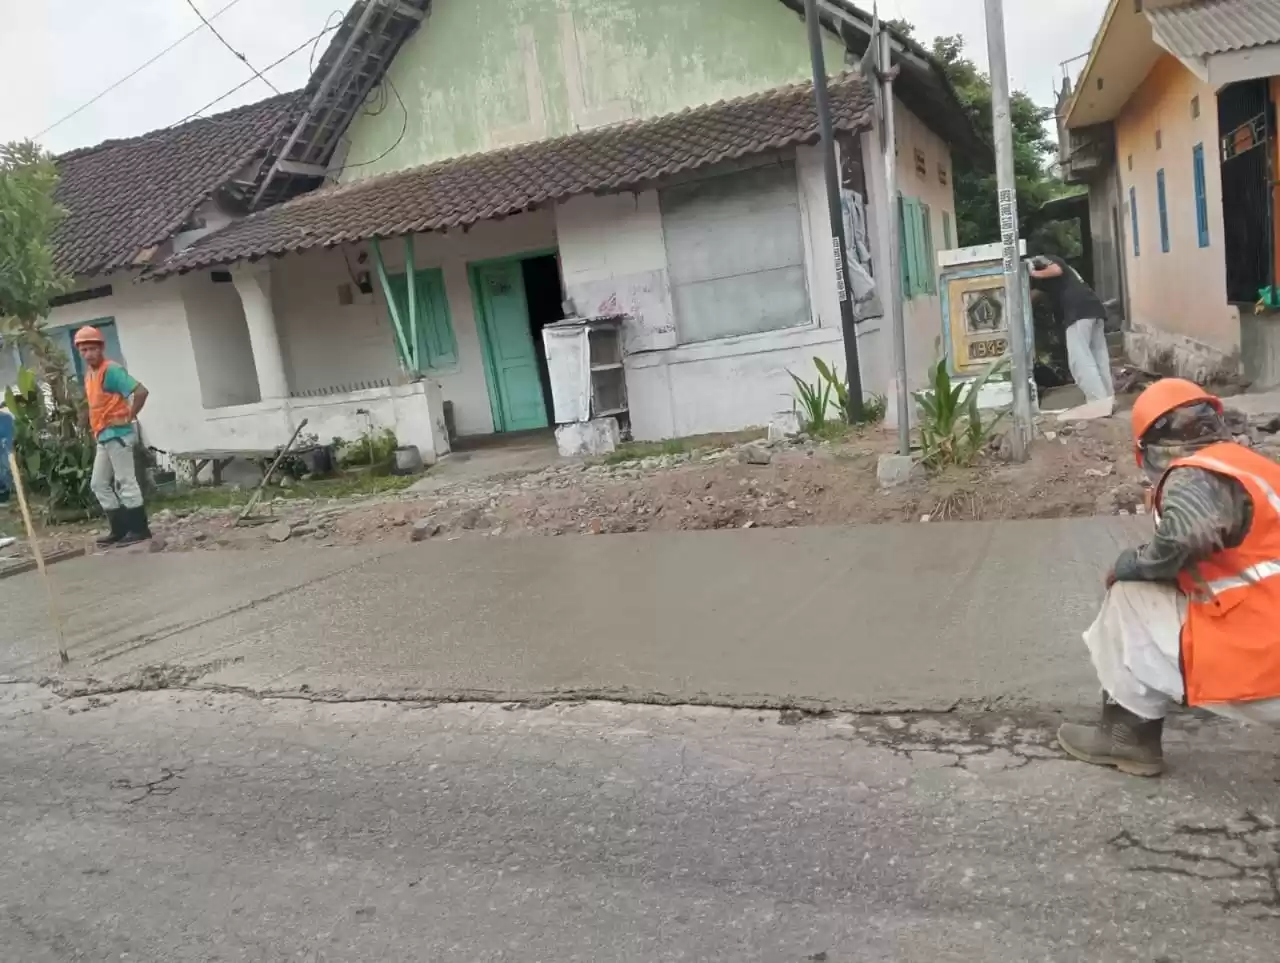 Proses pengerjaan perbaikan jalan oleh pekerja, ruas Sidodadi - Tawangsari Kecamatan Garum, Kabupaten Blitar (Foto: Dok MI/JK)